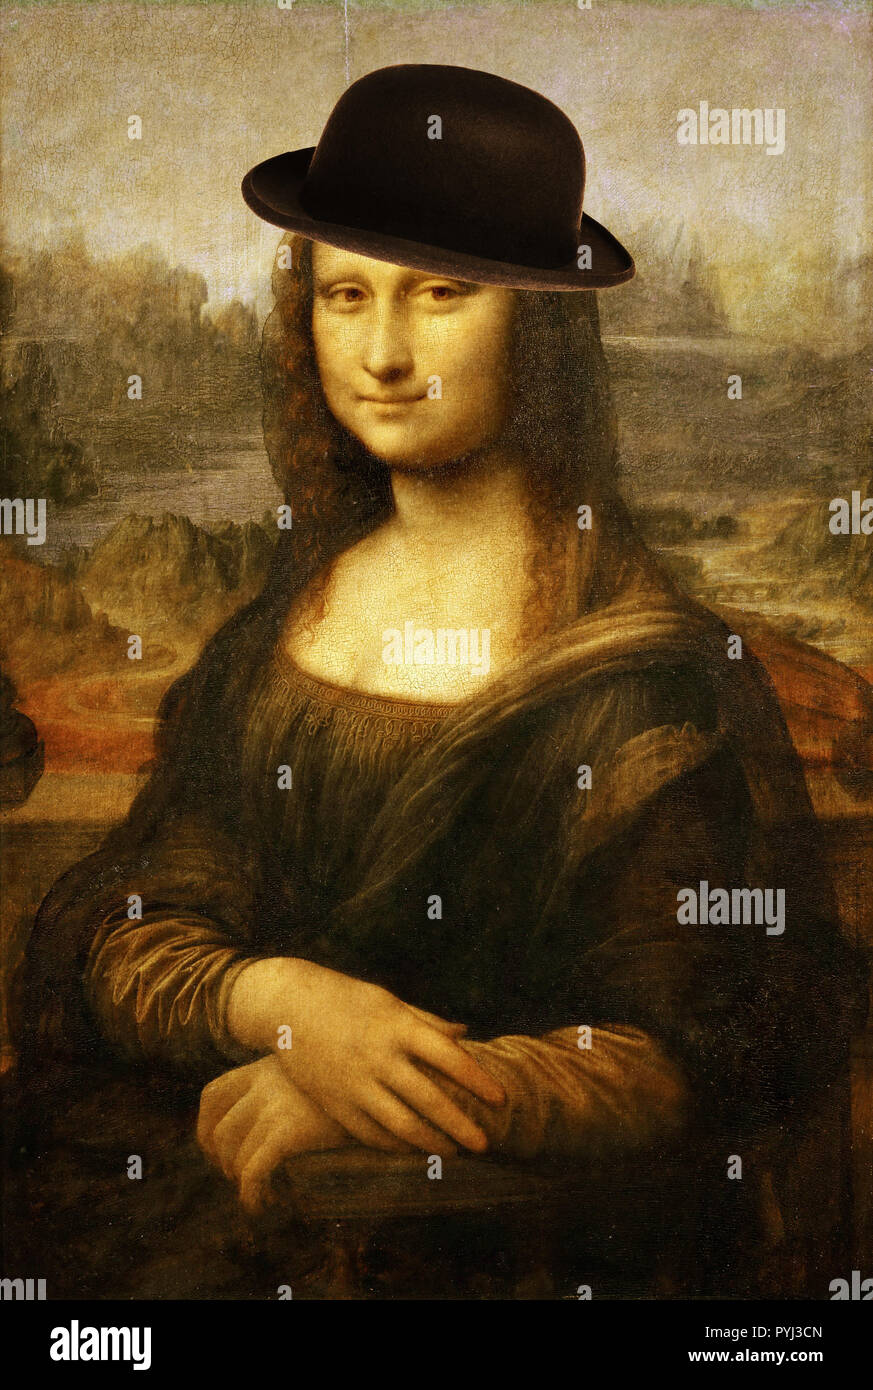 La famosa pintura de Leonardo da Vinci Mona Lisa con sombrero, modificados  digitalmente Fotografía de stock - Alamy